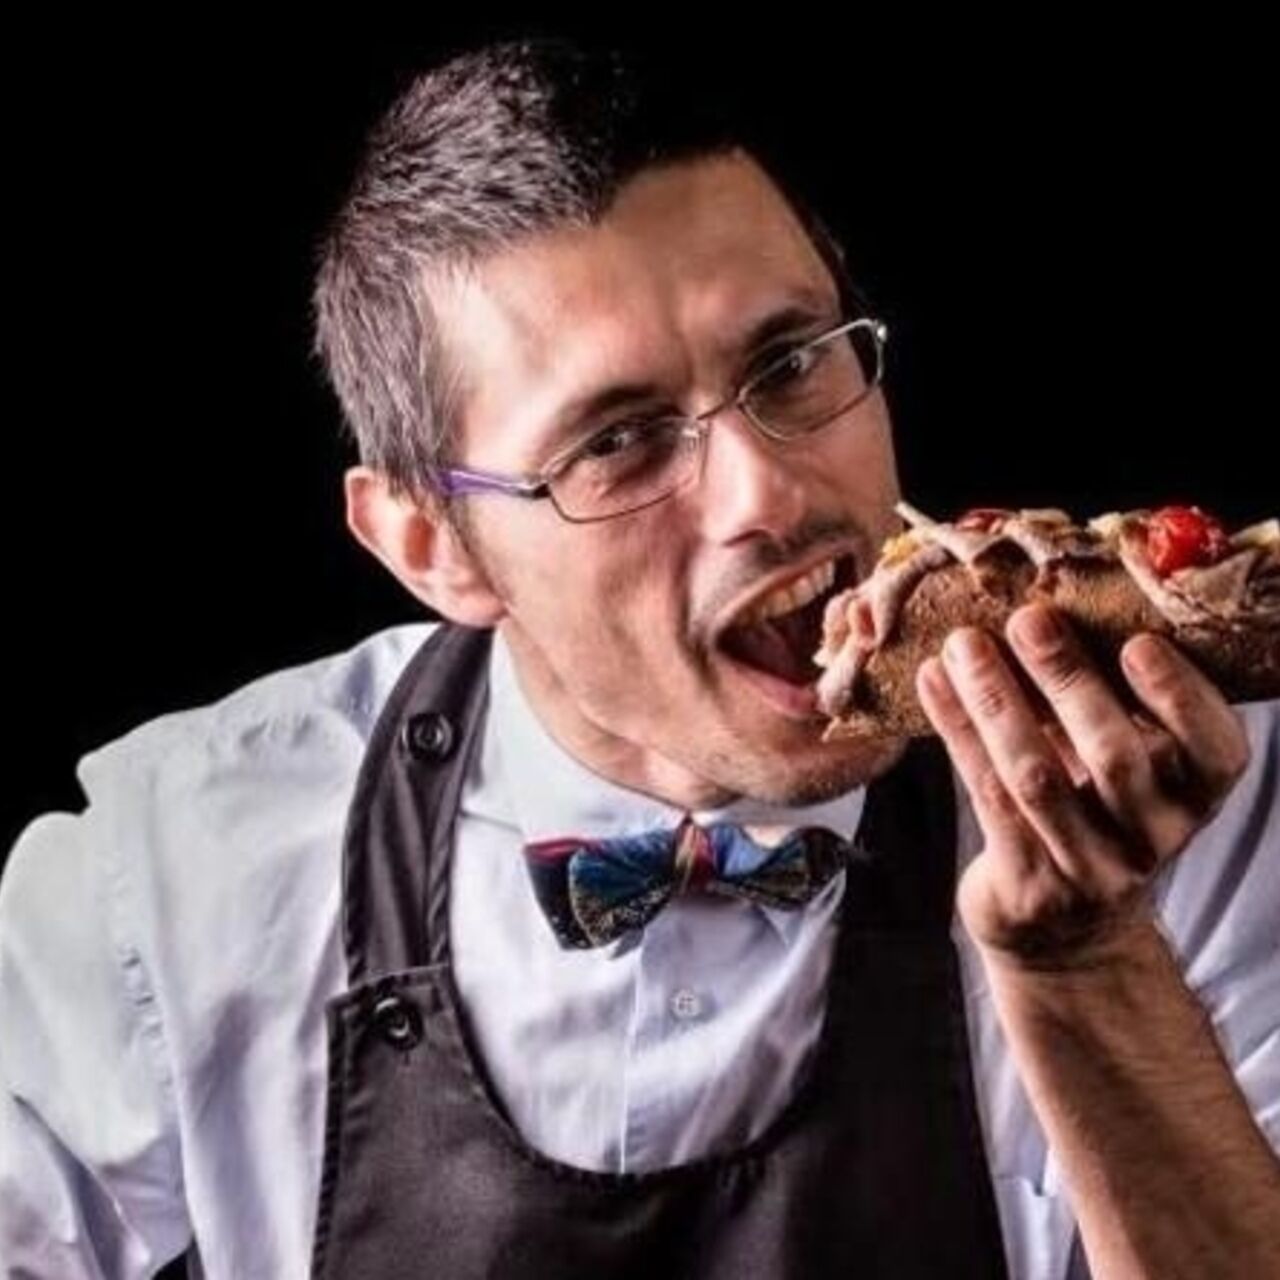 Gourmet sandwich: ແມ່ຄົວ Modena/ບໍ່ແມ່ນພໍ່ຄົວ Daniele Reponi ຈາກ... ຜູ້ຜະລິດເຖິງຜູ້ບໍລິໂພກ